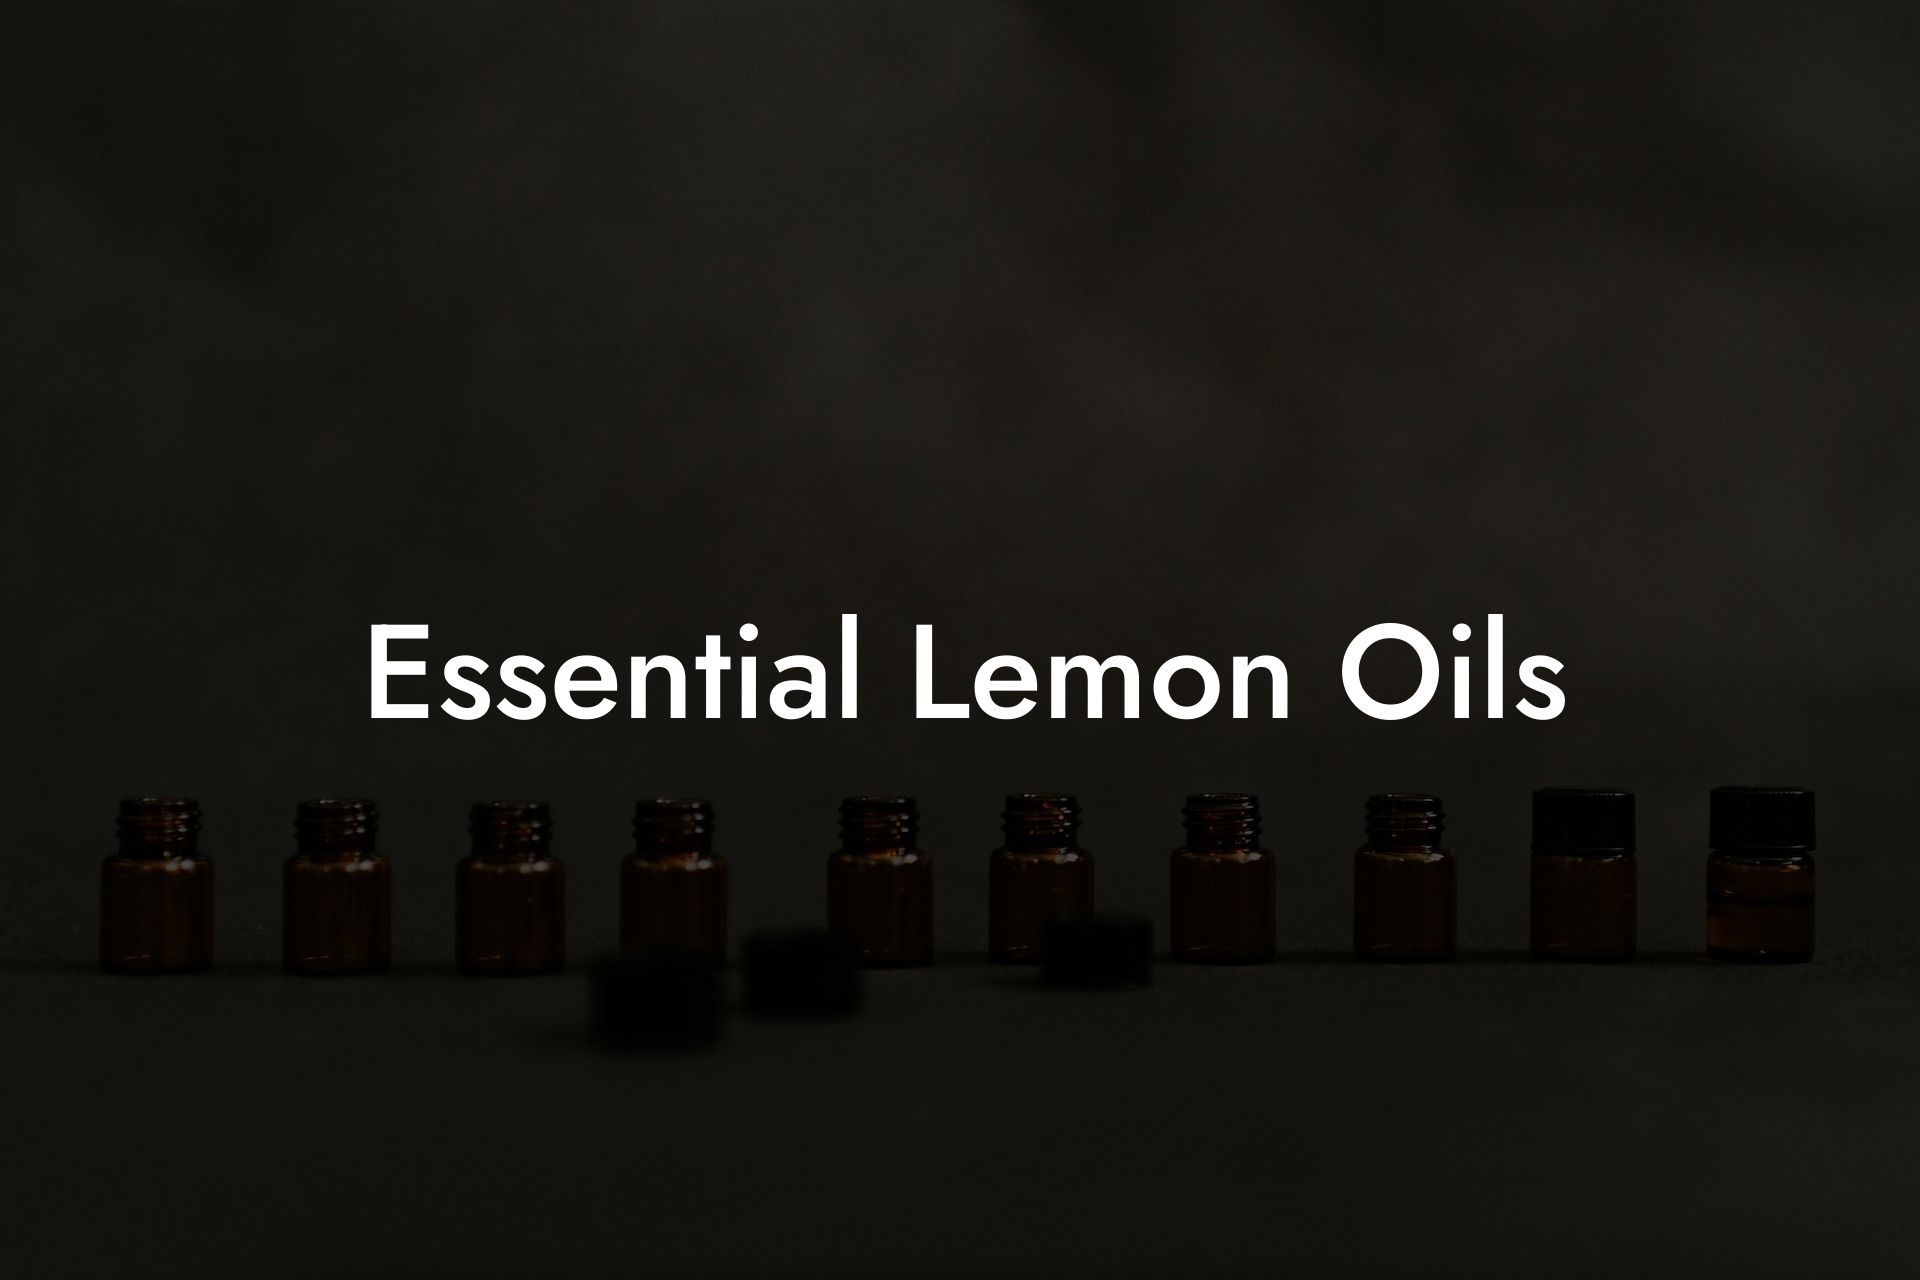 Essential Lemon Oils